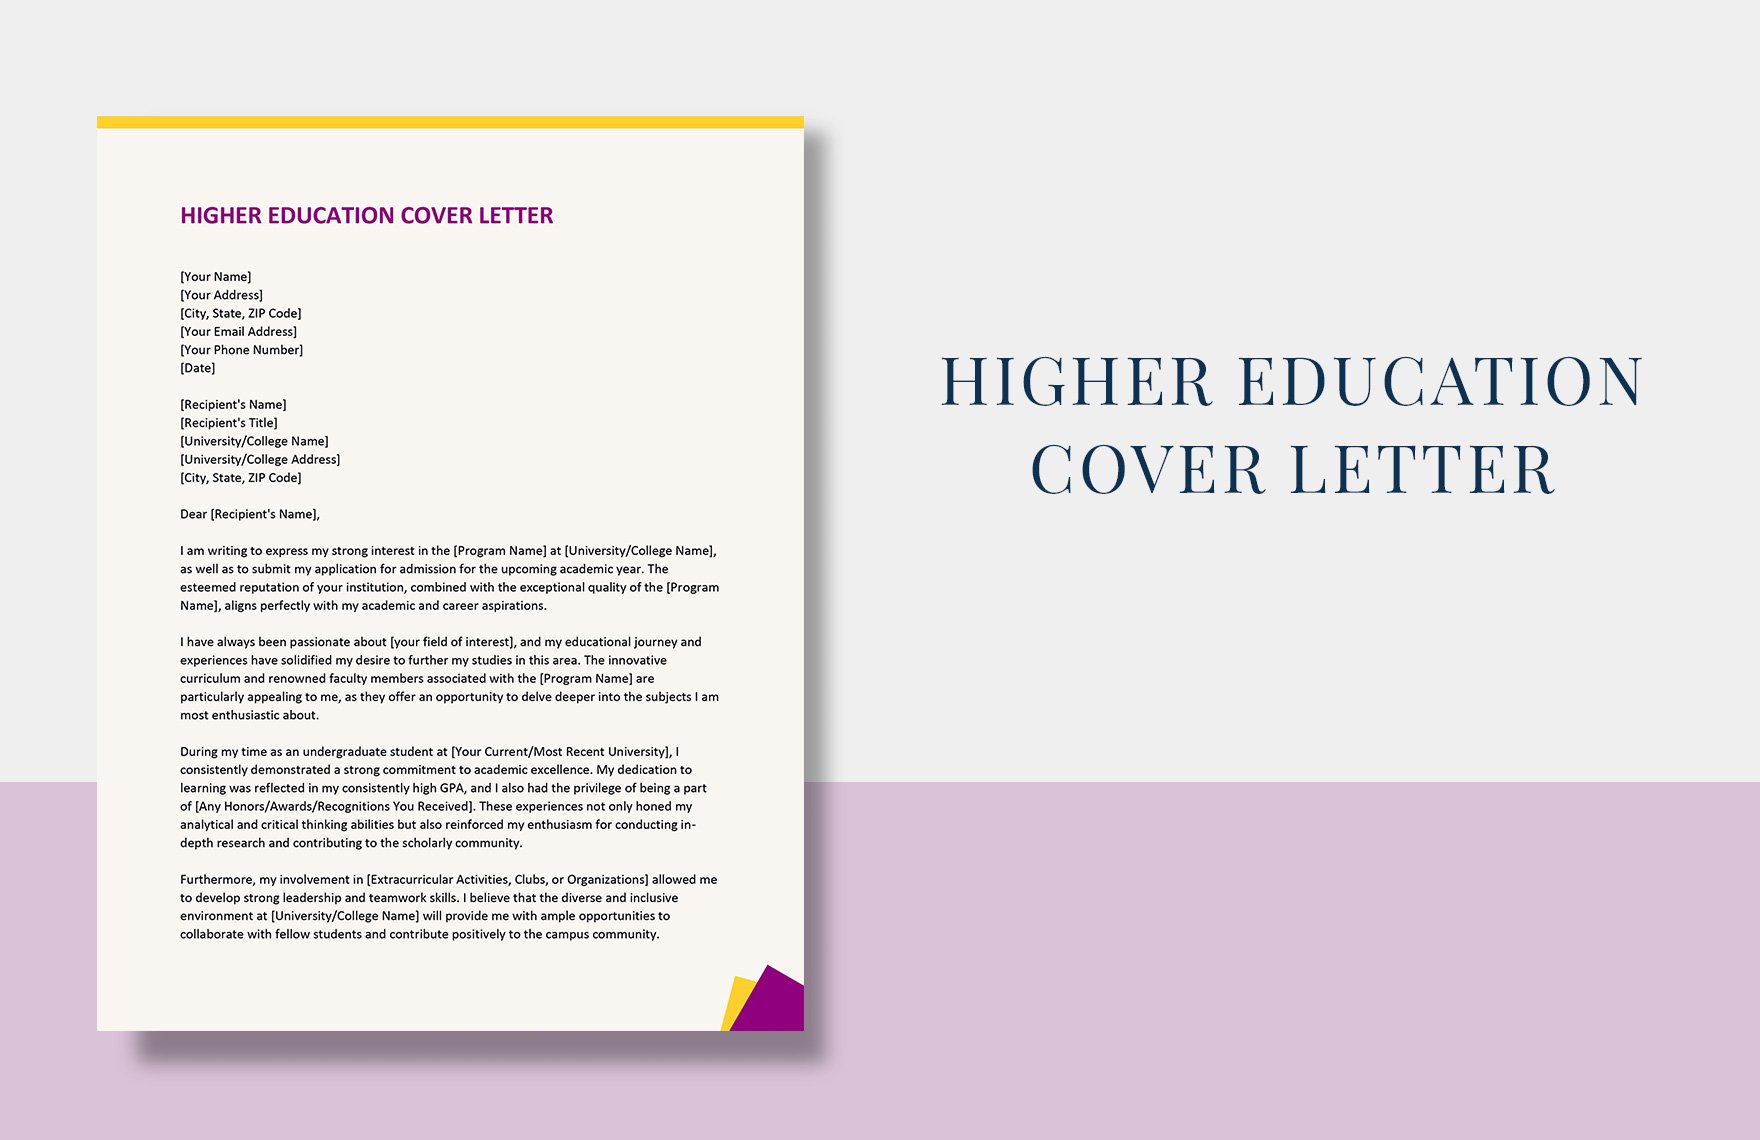 Higher Education Cover Letter